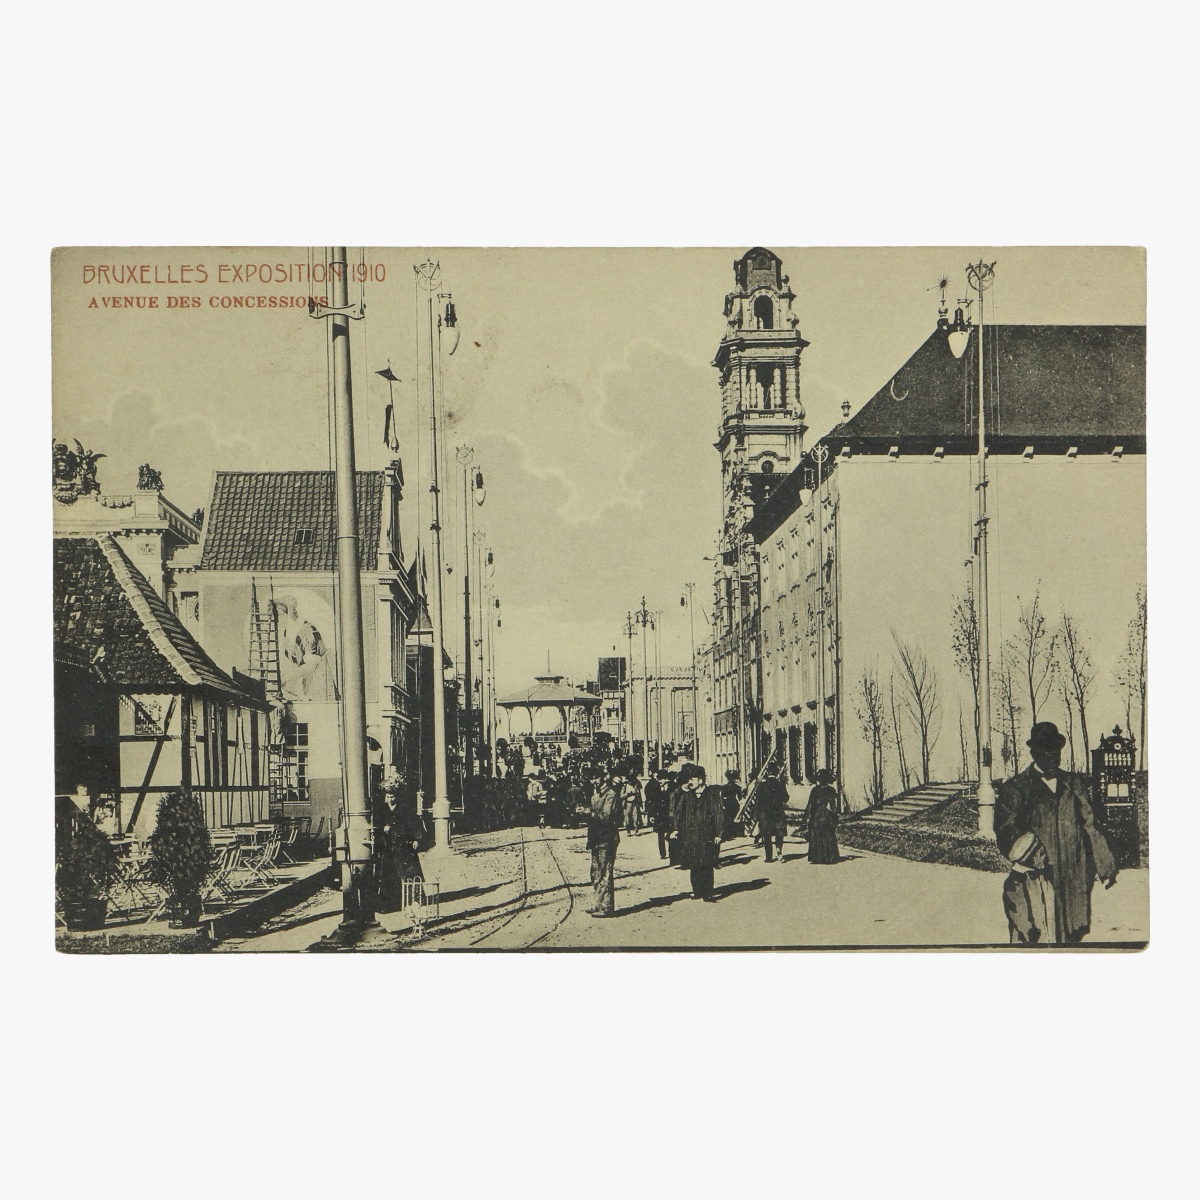 Afbeeldingen van bruxelles exposition 1910 a venue des concessions